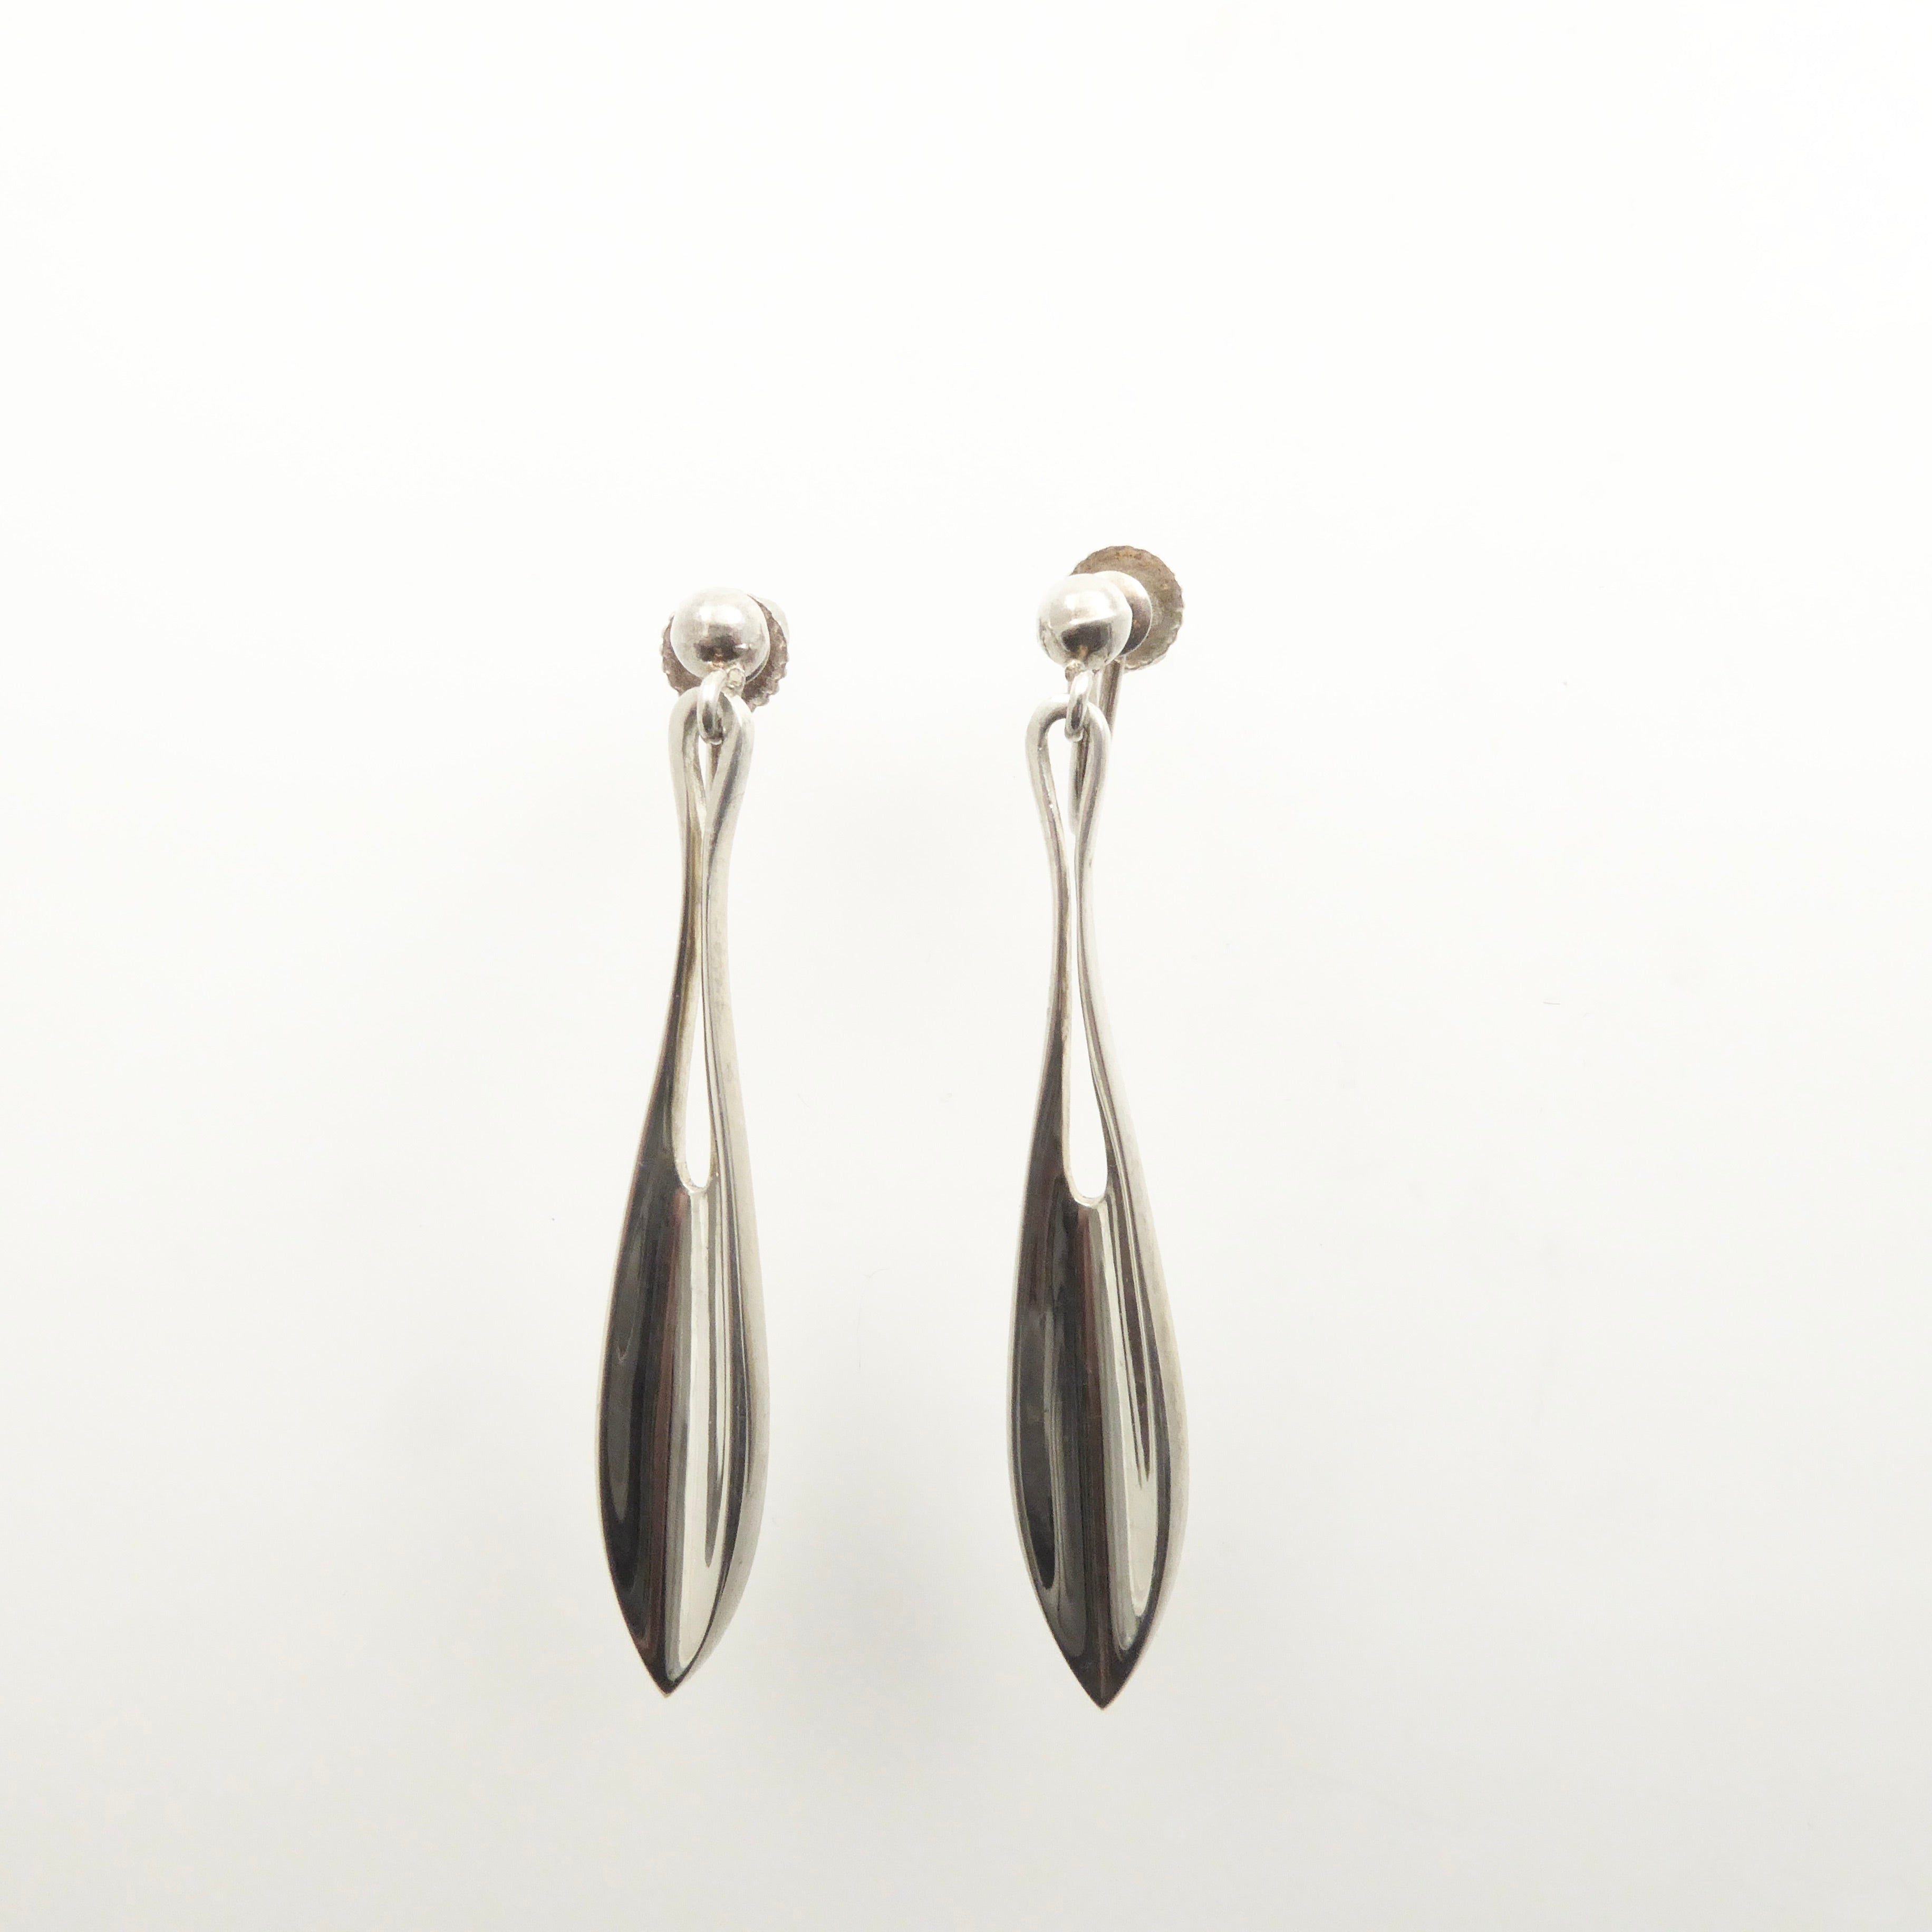 Modernist Silver Earrings by John Markusen